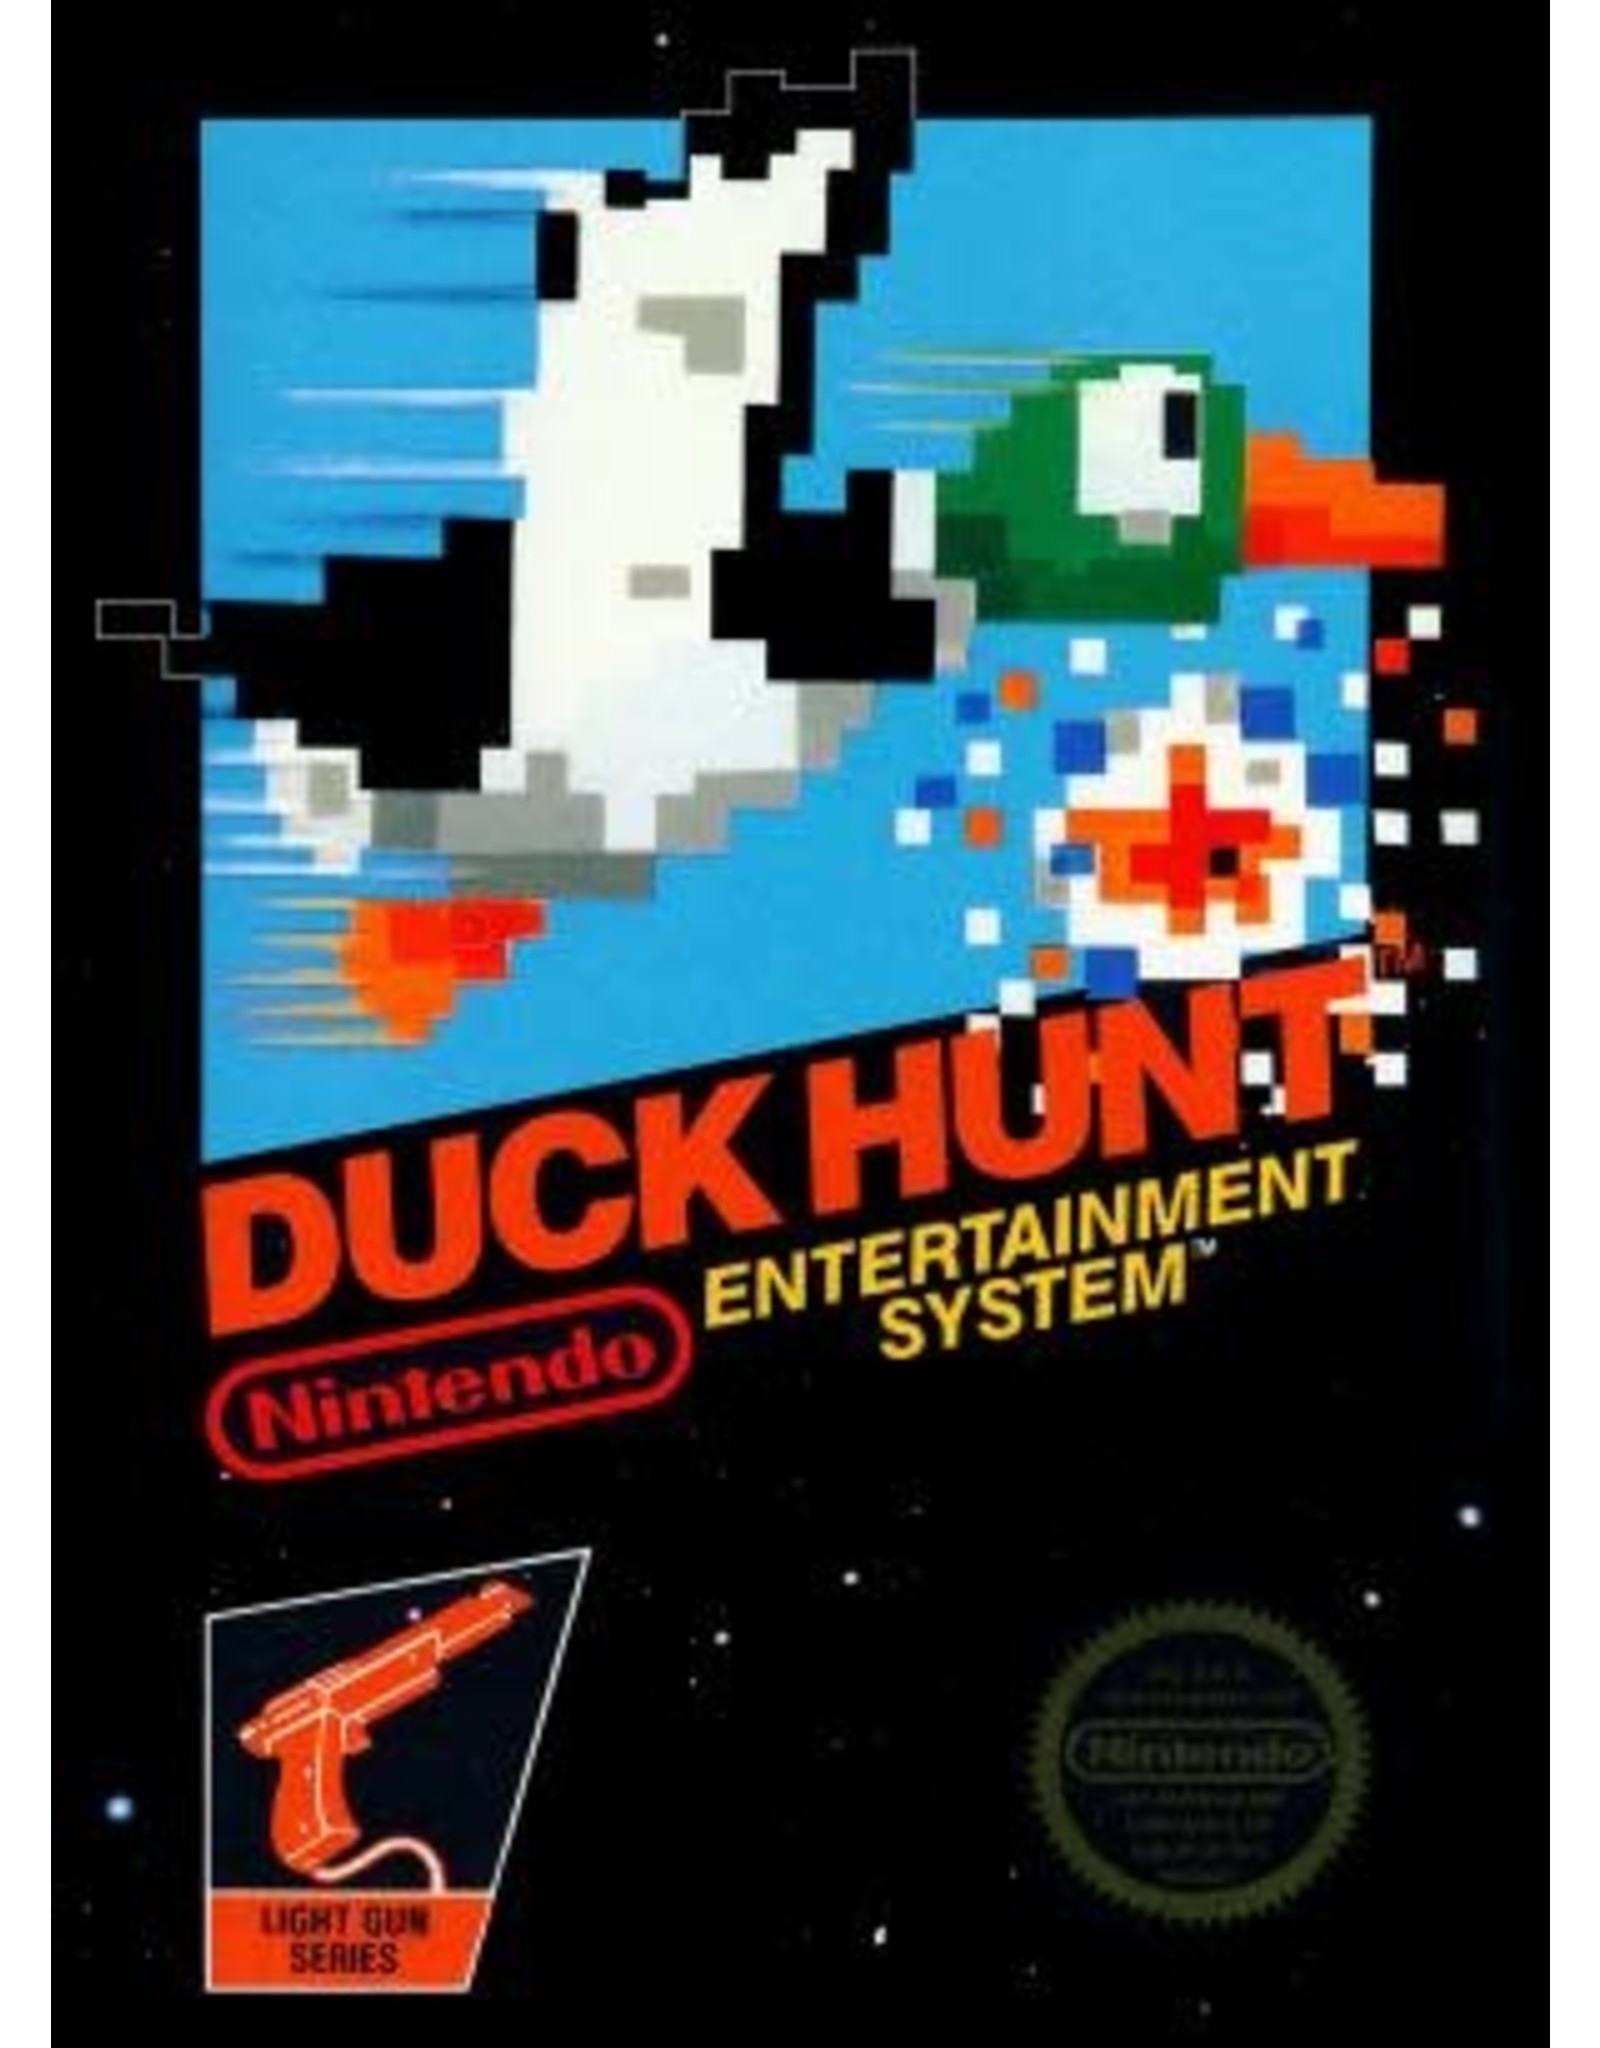 NES Duck Hunt (5 Screw, Cart Only, Damaged Label)